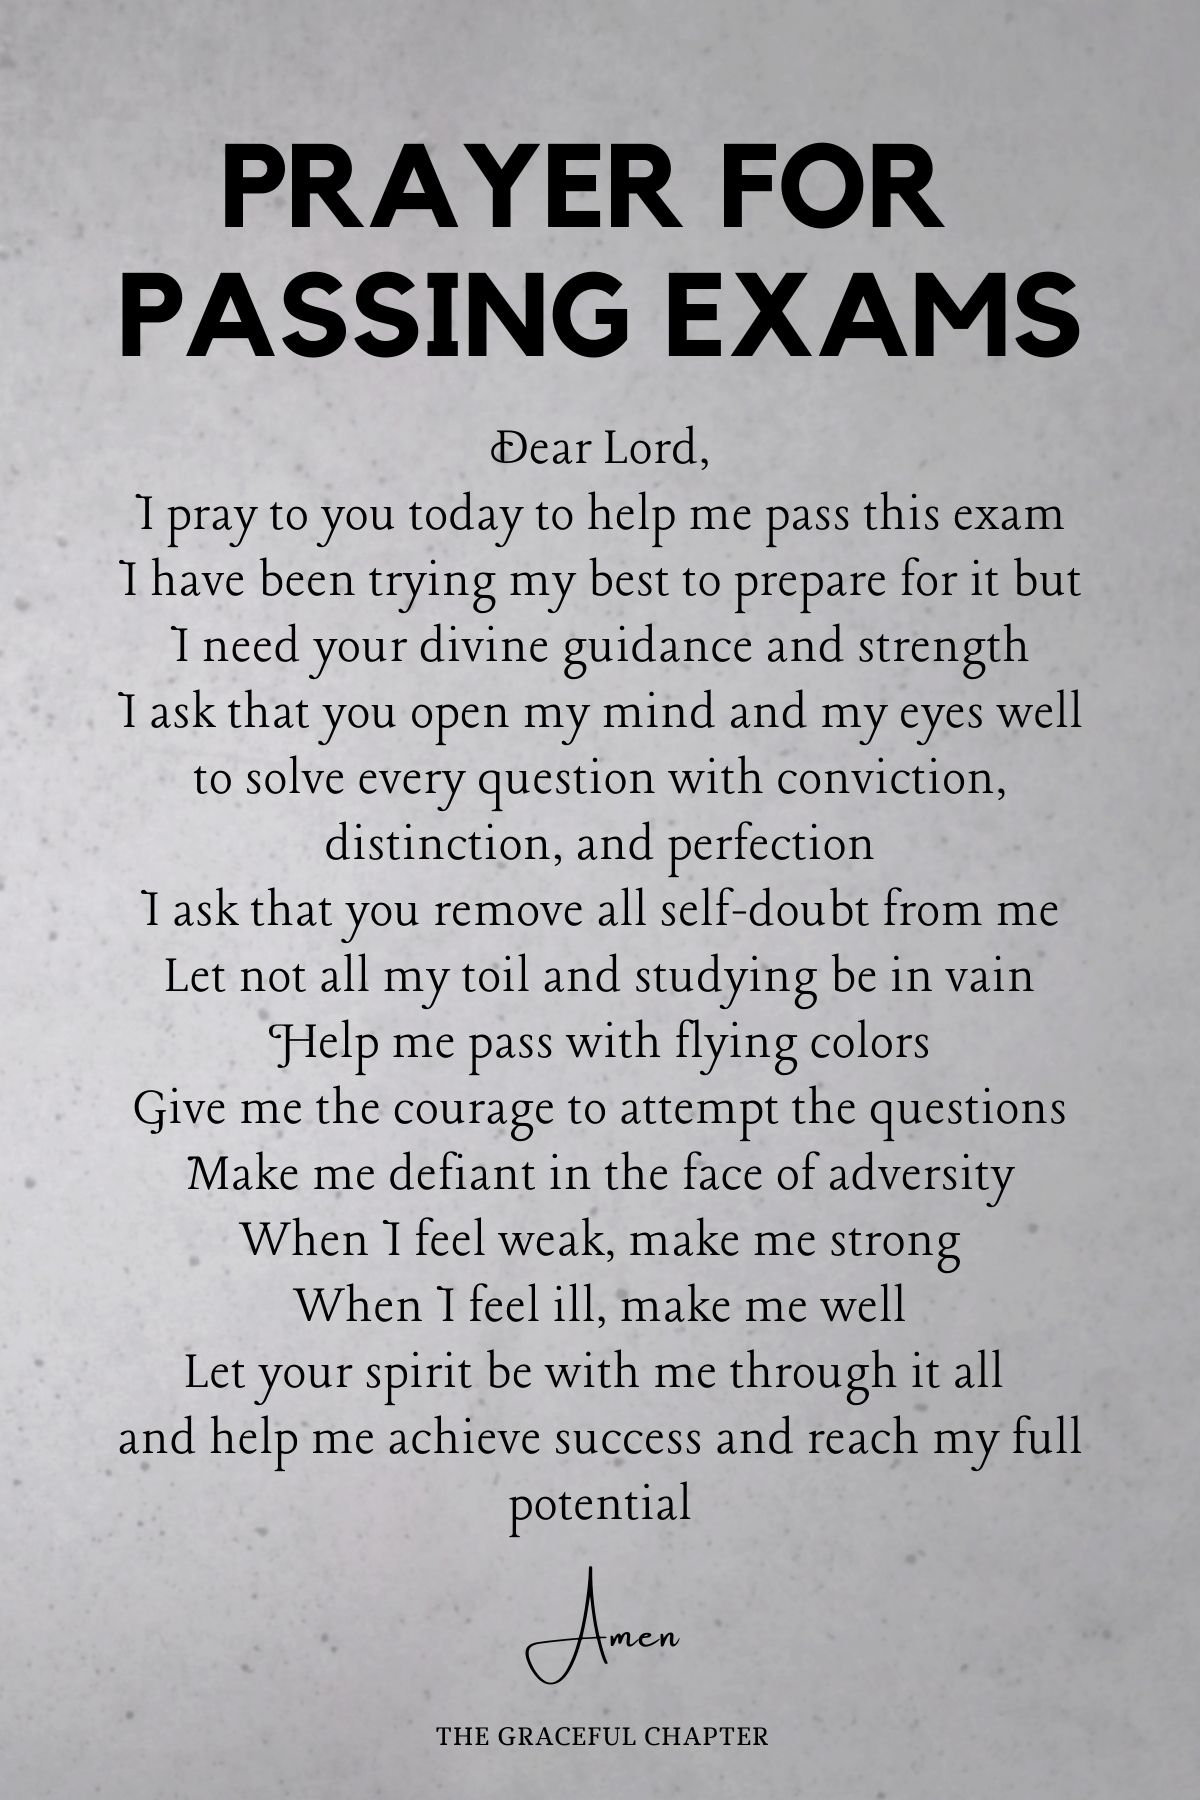 Prayer for Passing Exams